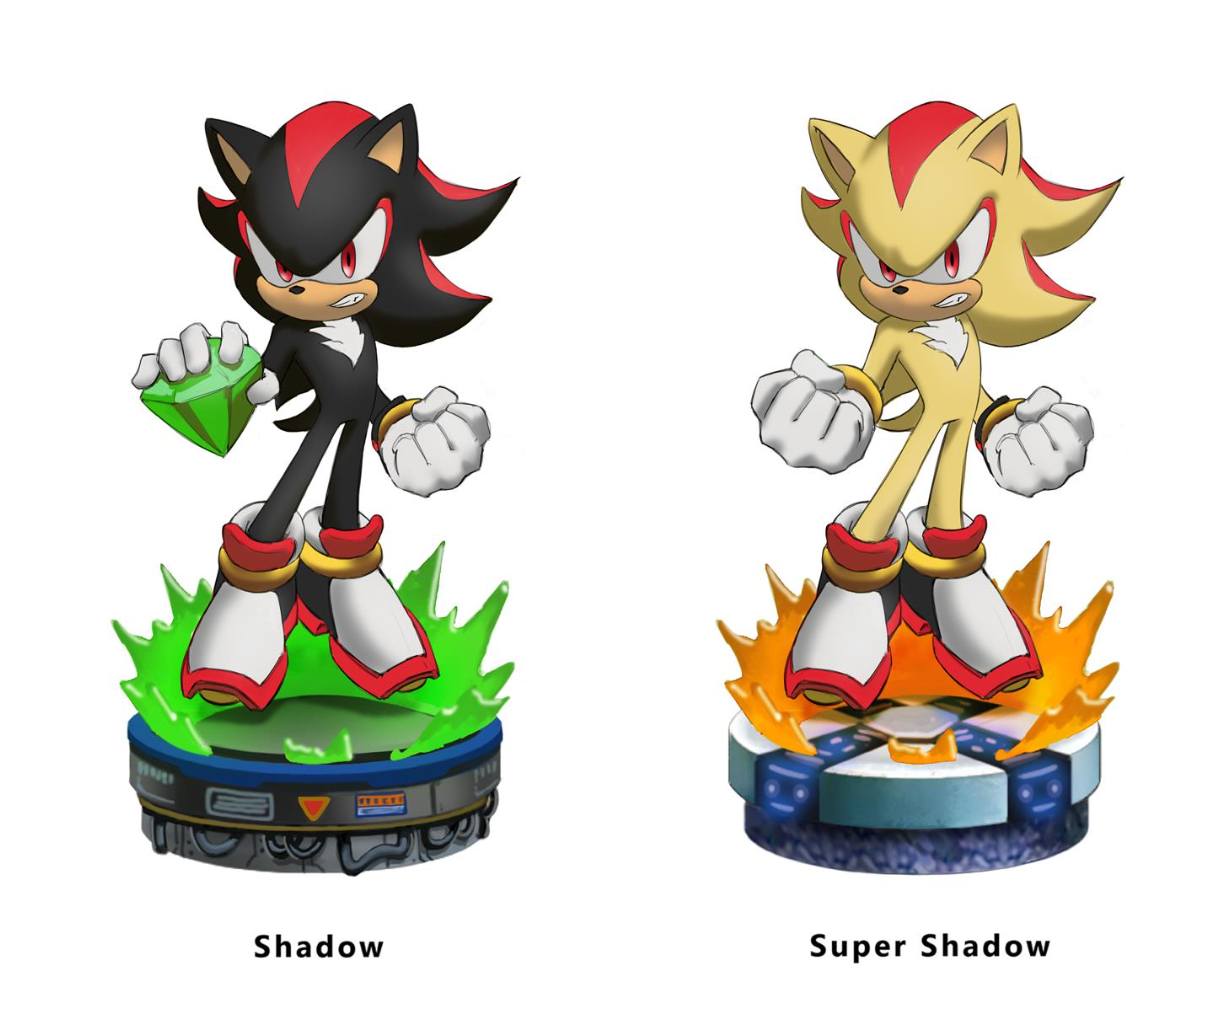 Shadow the Hedgehog  Shadow the hedgehog, Sonic and shadow, Hedgehog